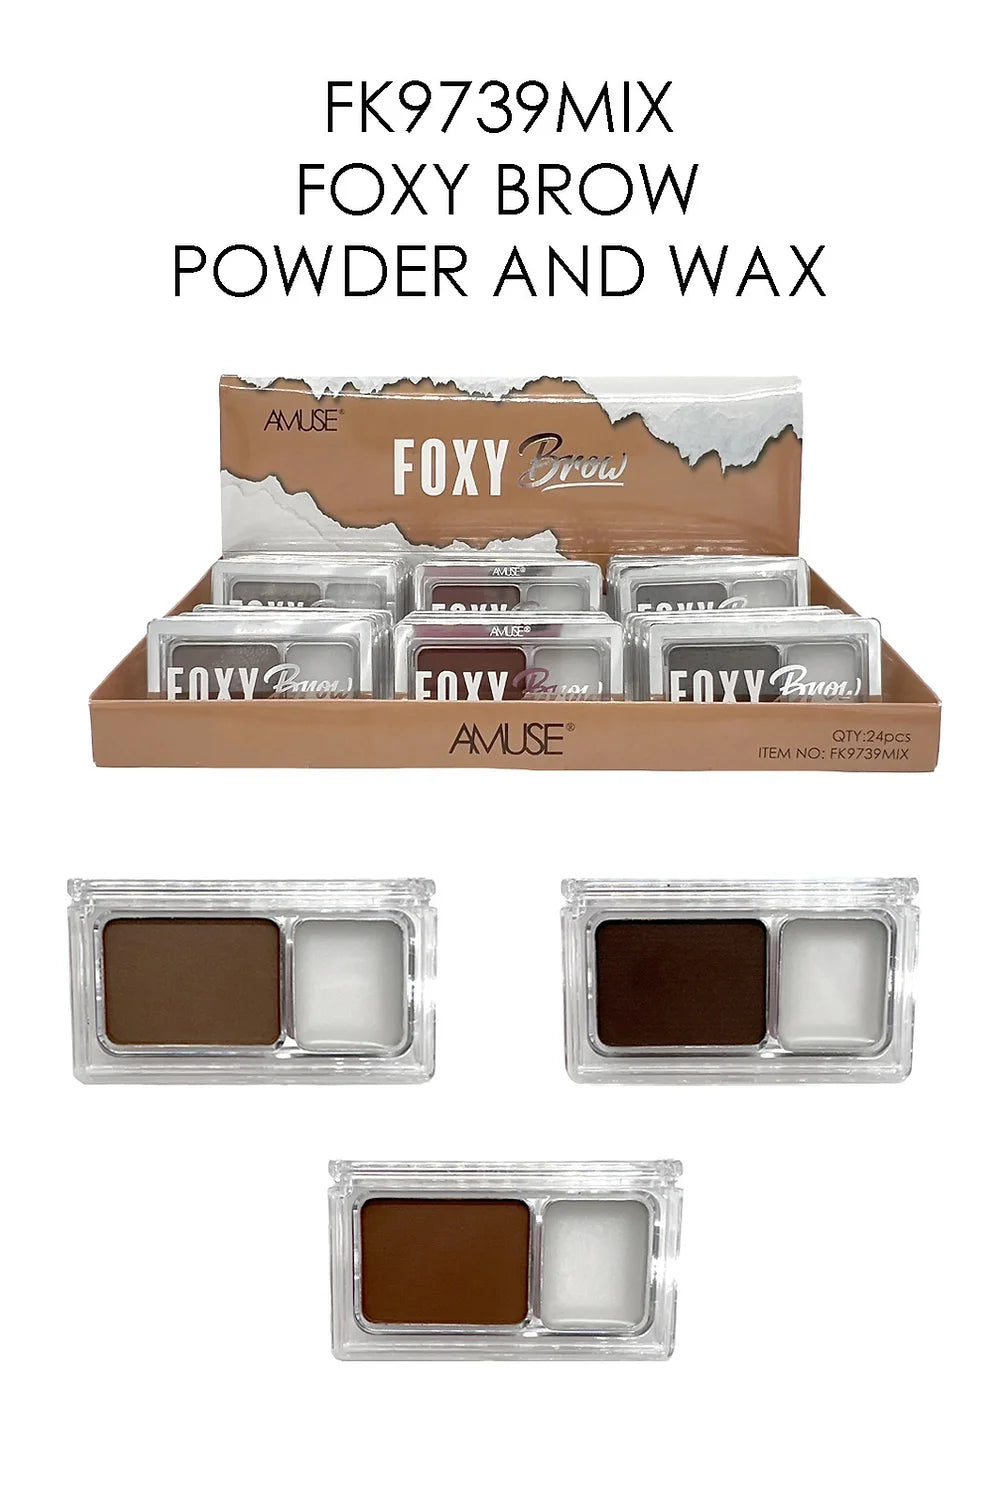 Foxy Brow Powder and Wax Display